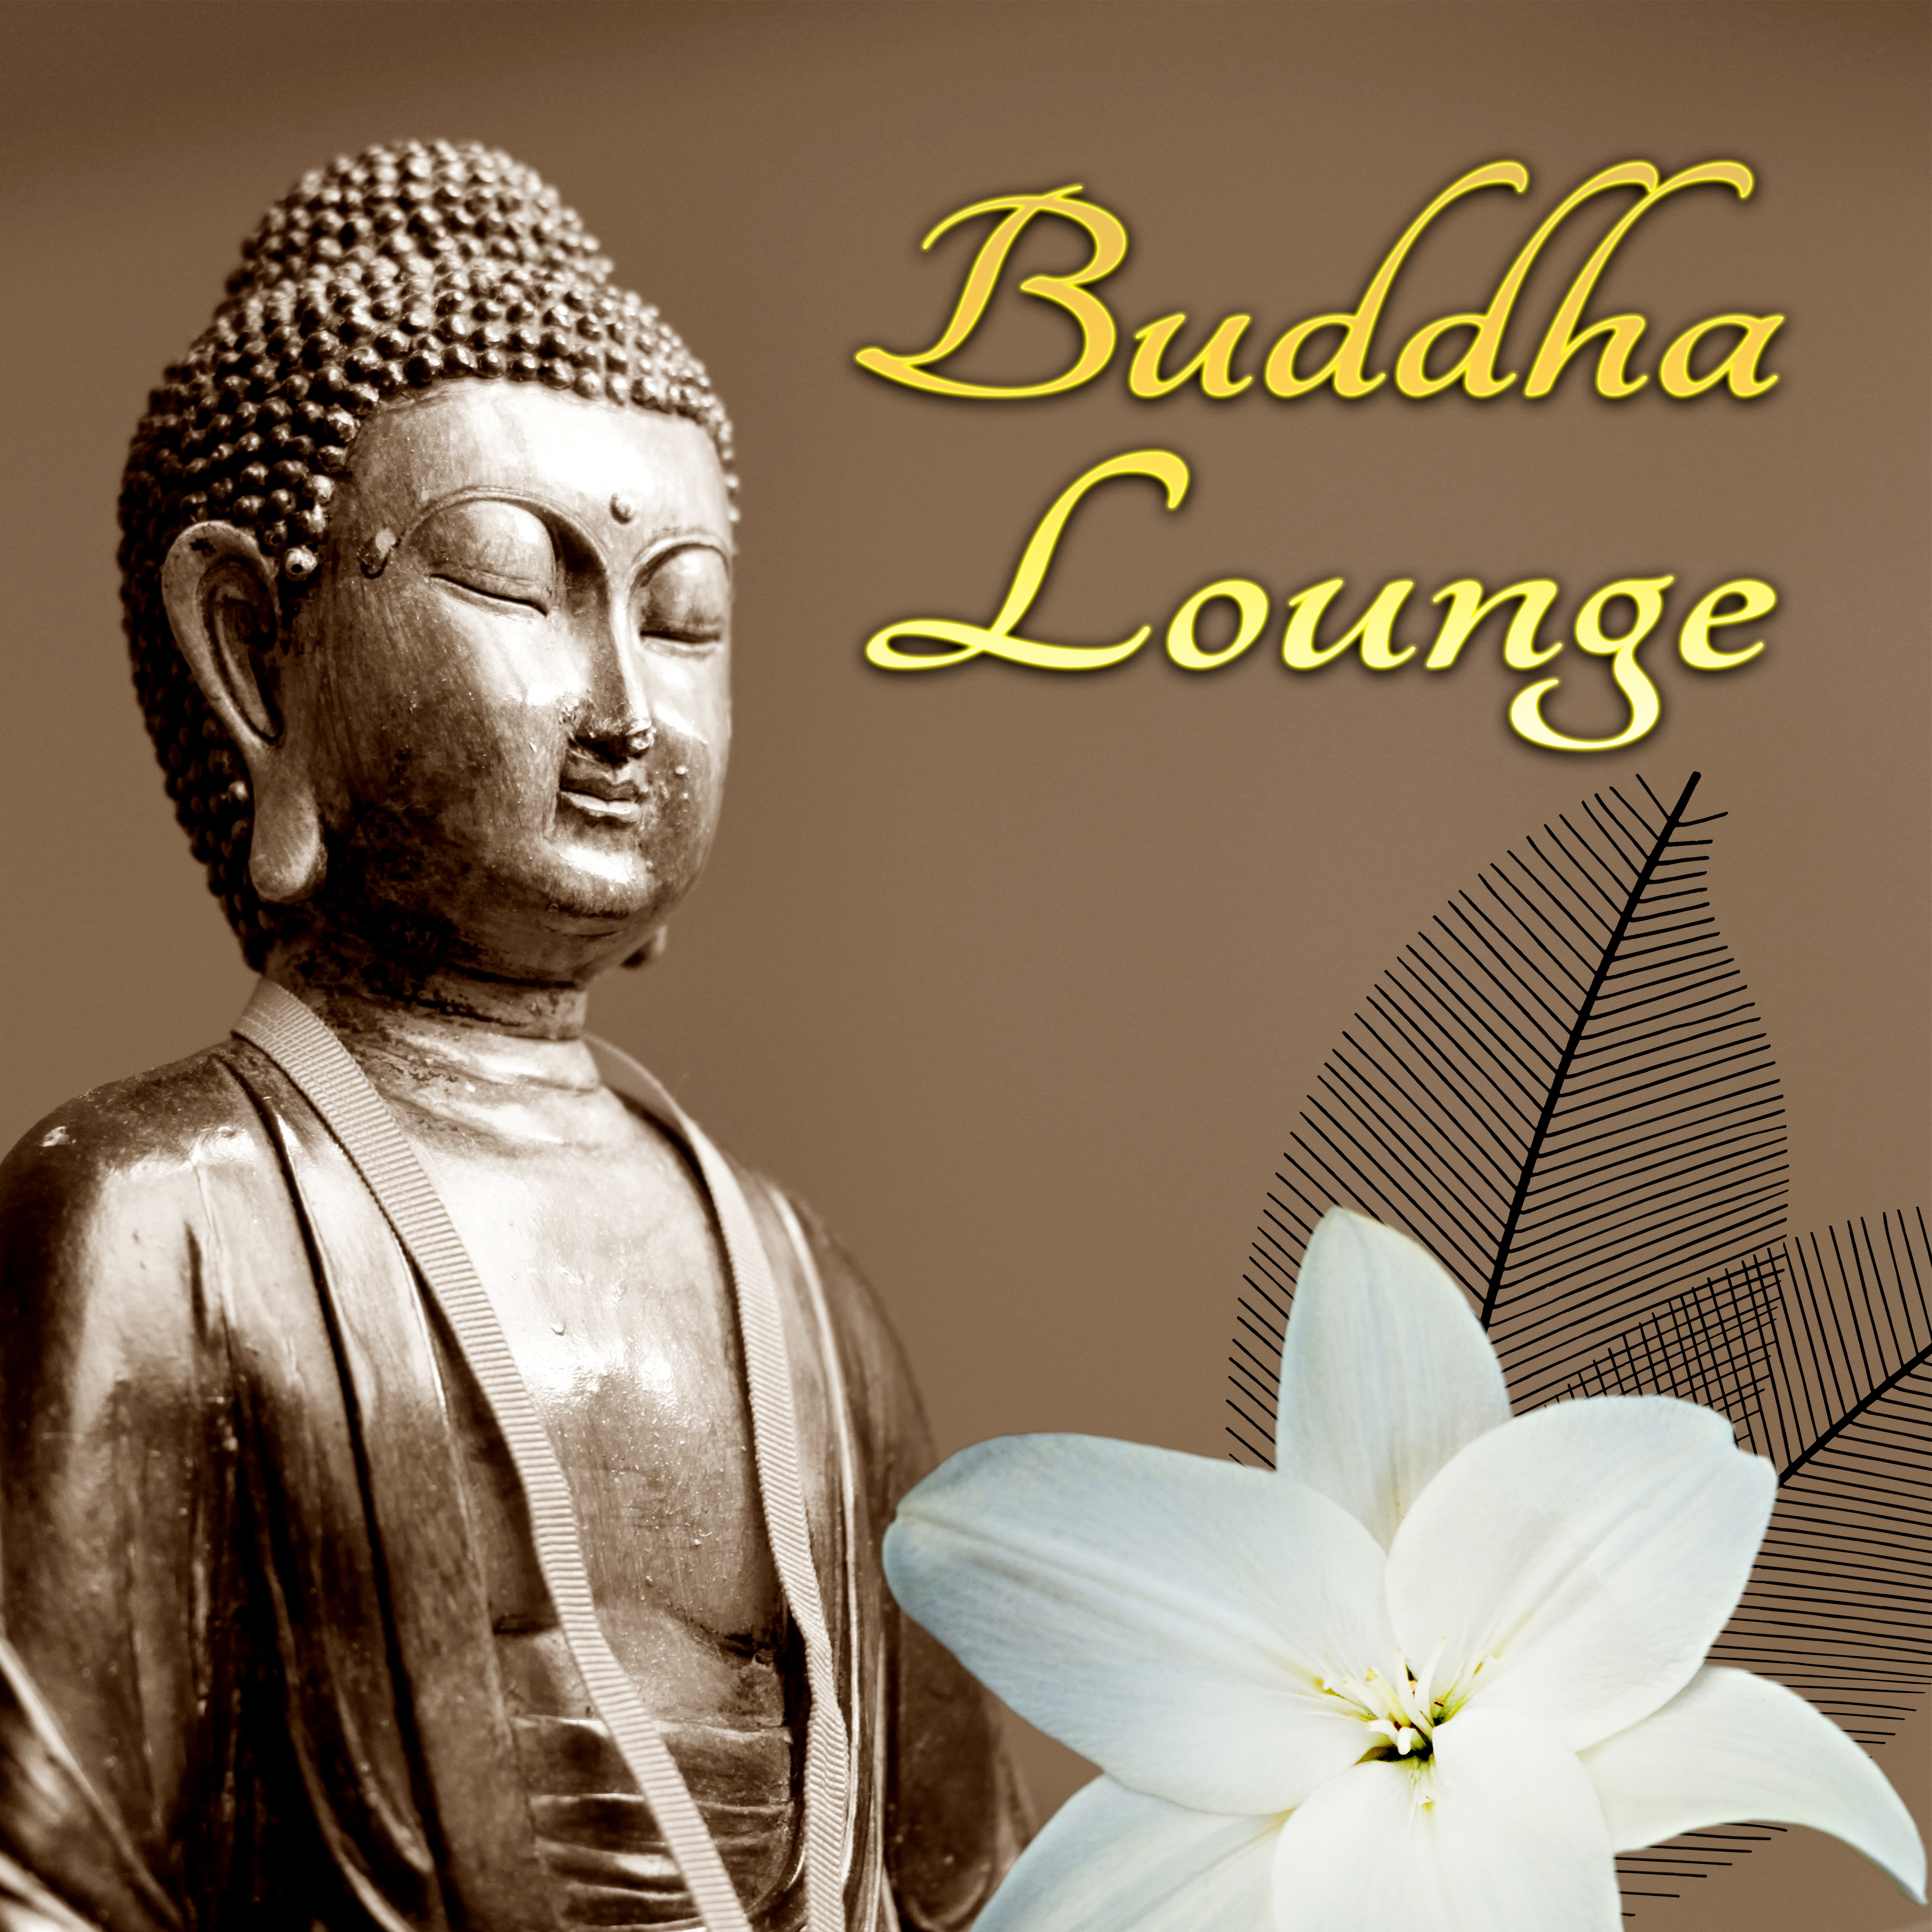 Buddha Lounge – Chillout Music, Buddha Spirit, Groove, Chill Sessions, Buddha Spritz, Musica Chill Out, Just Relax, **** Songs